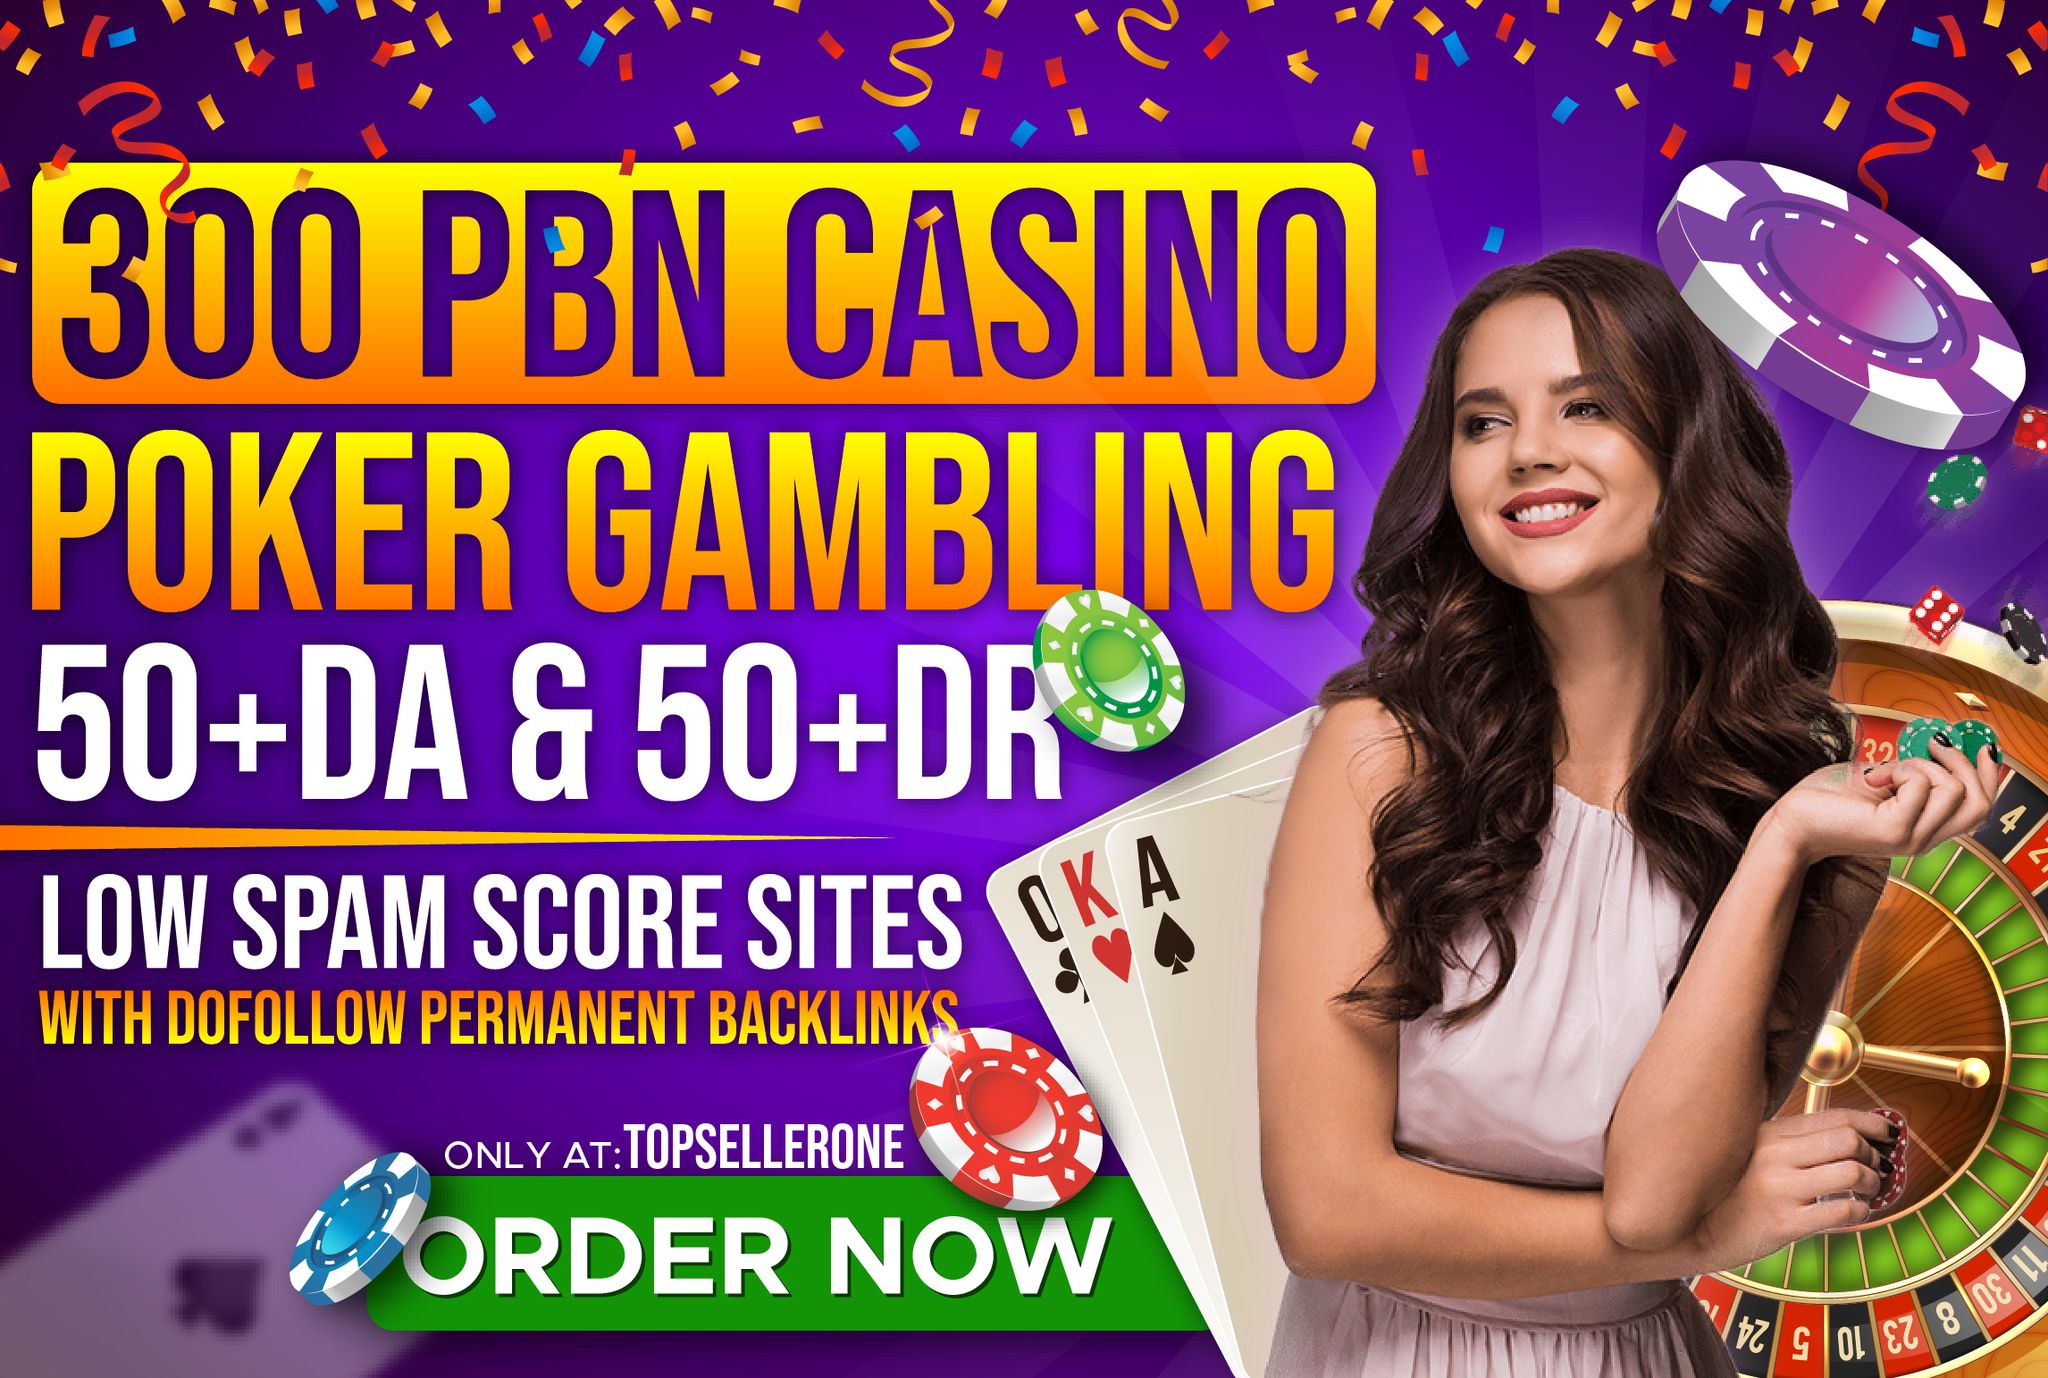 Casino Poker Gambling 300 PBN with high DA 60+ & DR 50+ Low Spam Score dofollow permanent backlinks